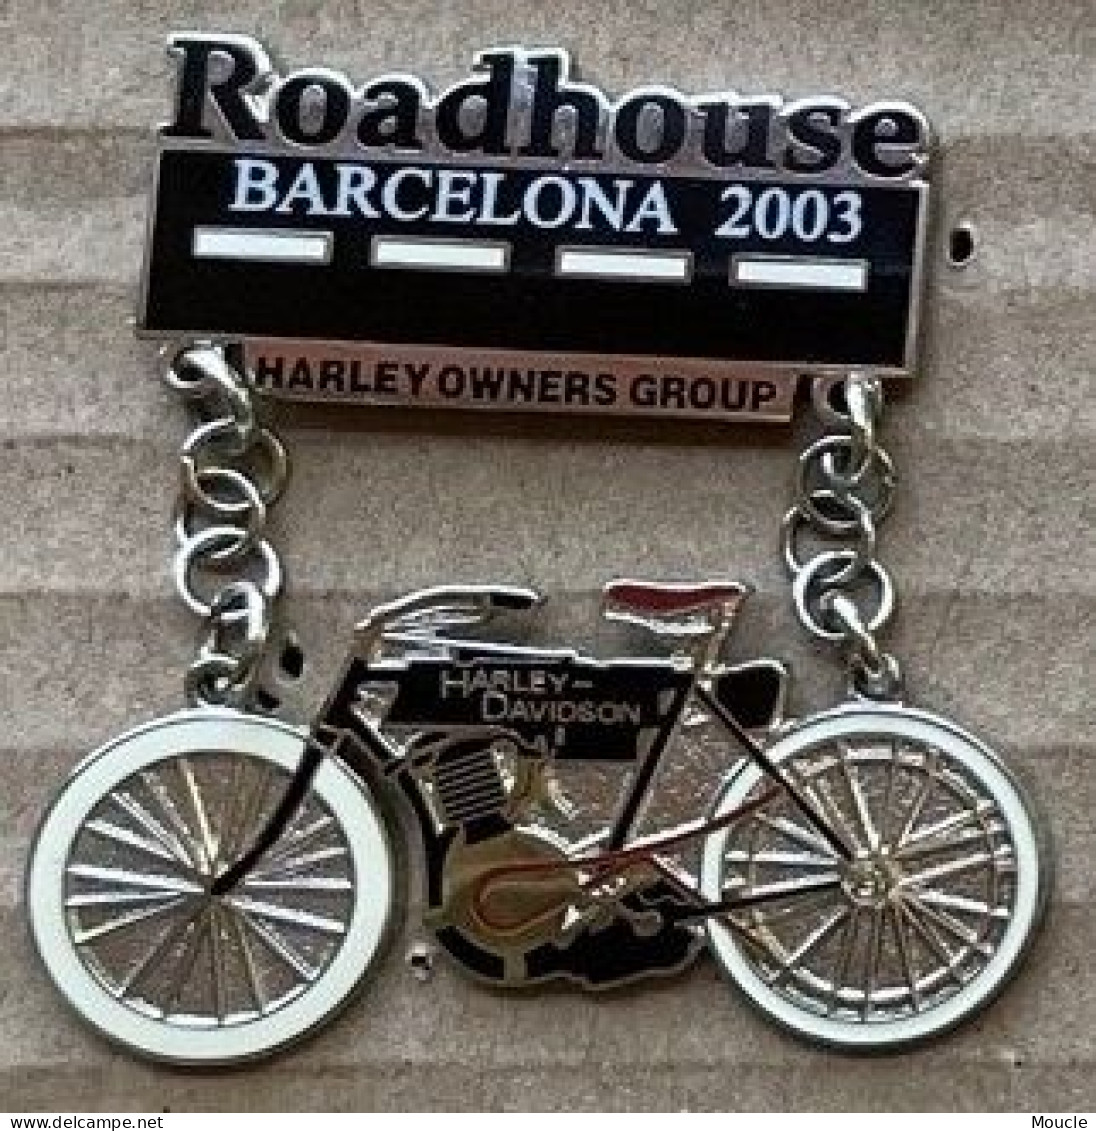 MOTO - HARLEY DAVIDSON - MOTORBIKE - MOTORRAD - ROADHOUSE BARCELONA 2033 - HARLEY OWNERS GROUPE - HG - (BLANCO) - Motos